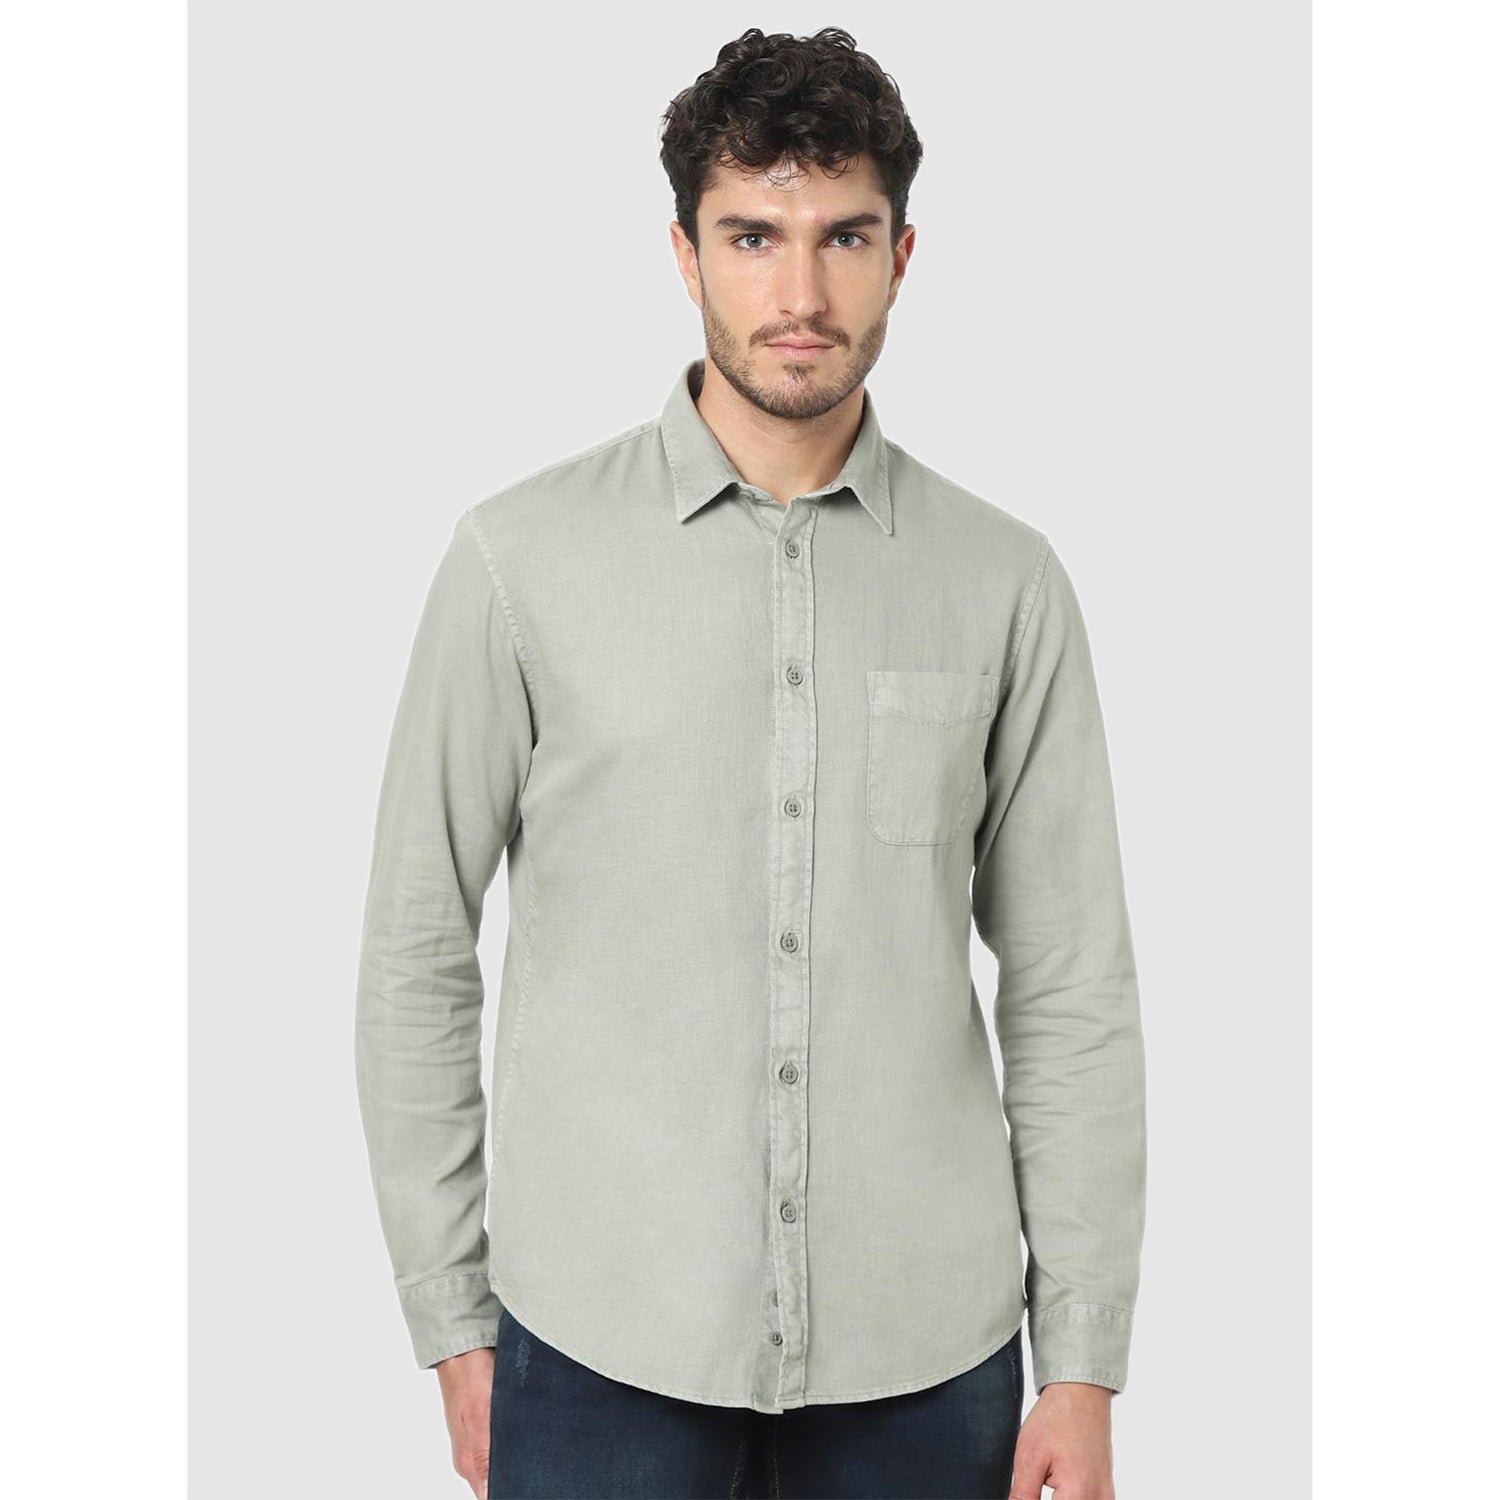 Grey Solid Long Sleeves Classic Casual Shirt (CAJEAN)